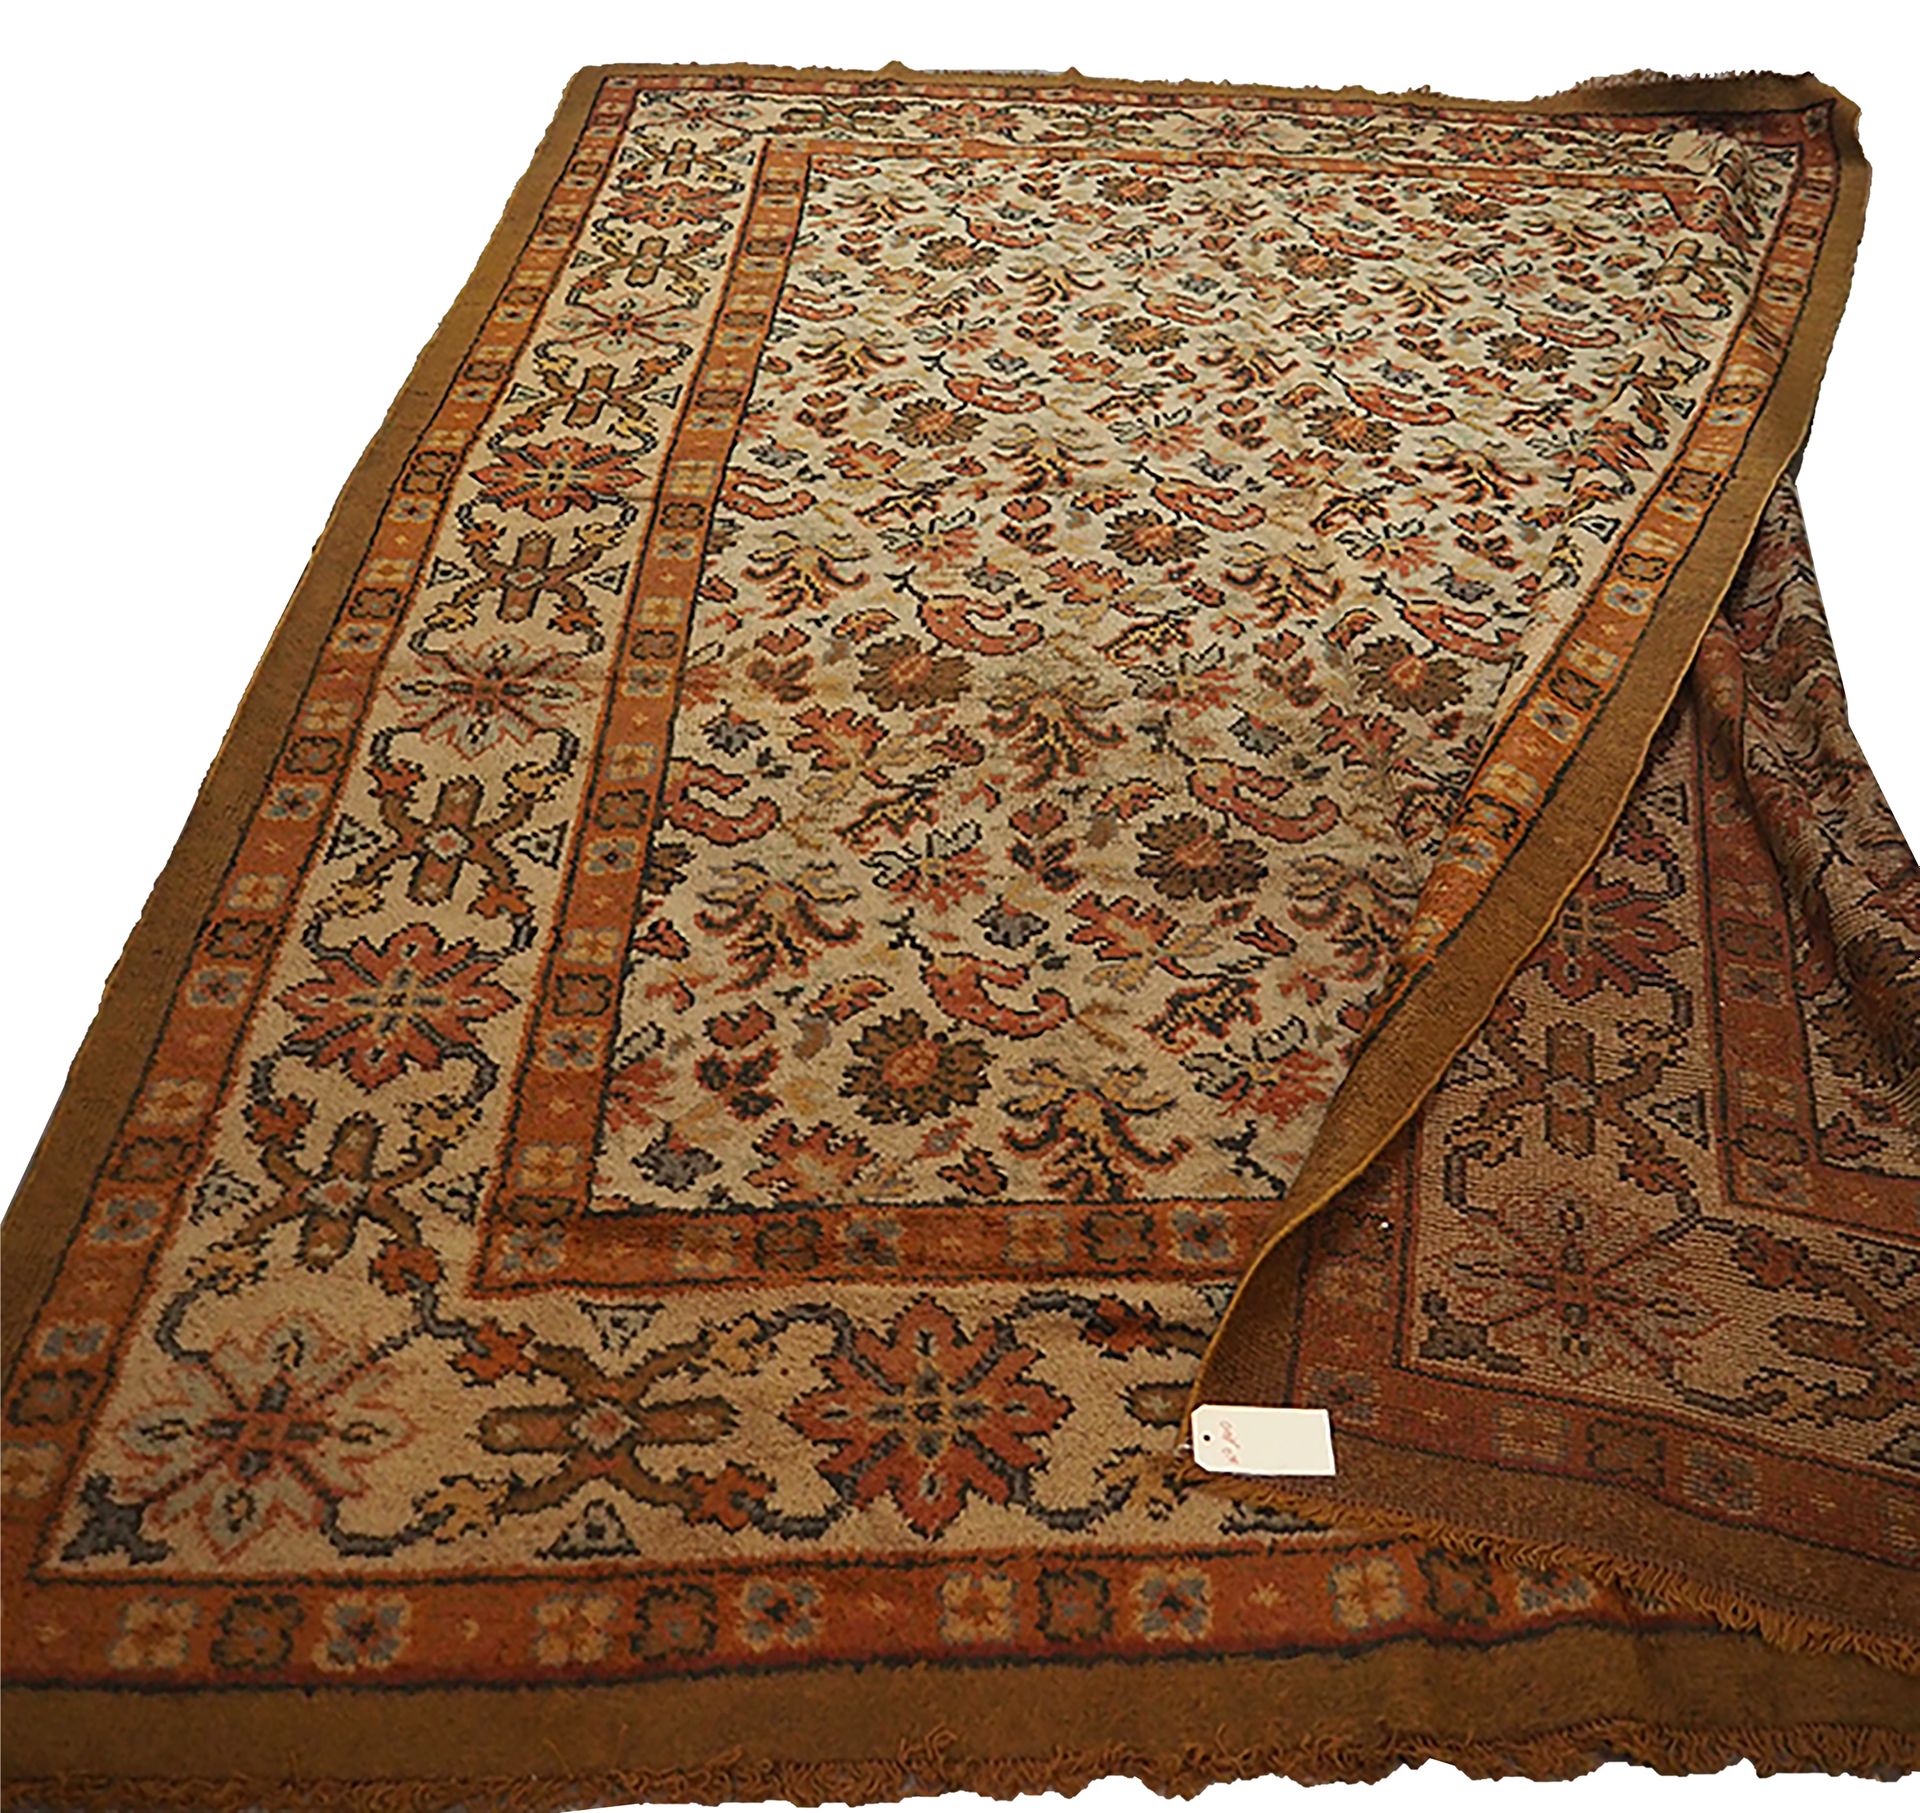 Null 重要的打结地毯 - 印度

20世纪中叶

尺寸：394 x 290厘米

羊毛基础上的羊毛丝绒

总体状况良好

米色领域，有棕榈花和风格化的叶子
&hellip;